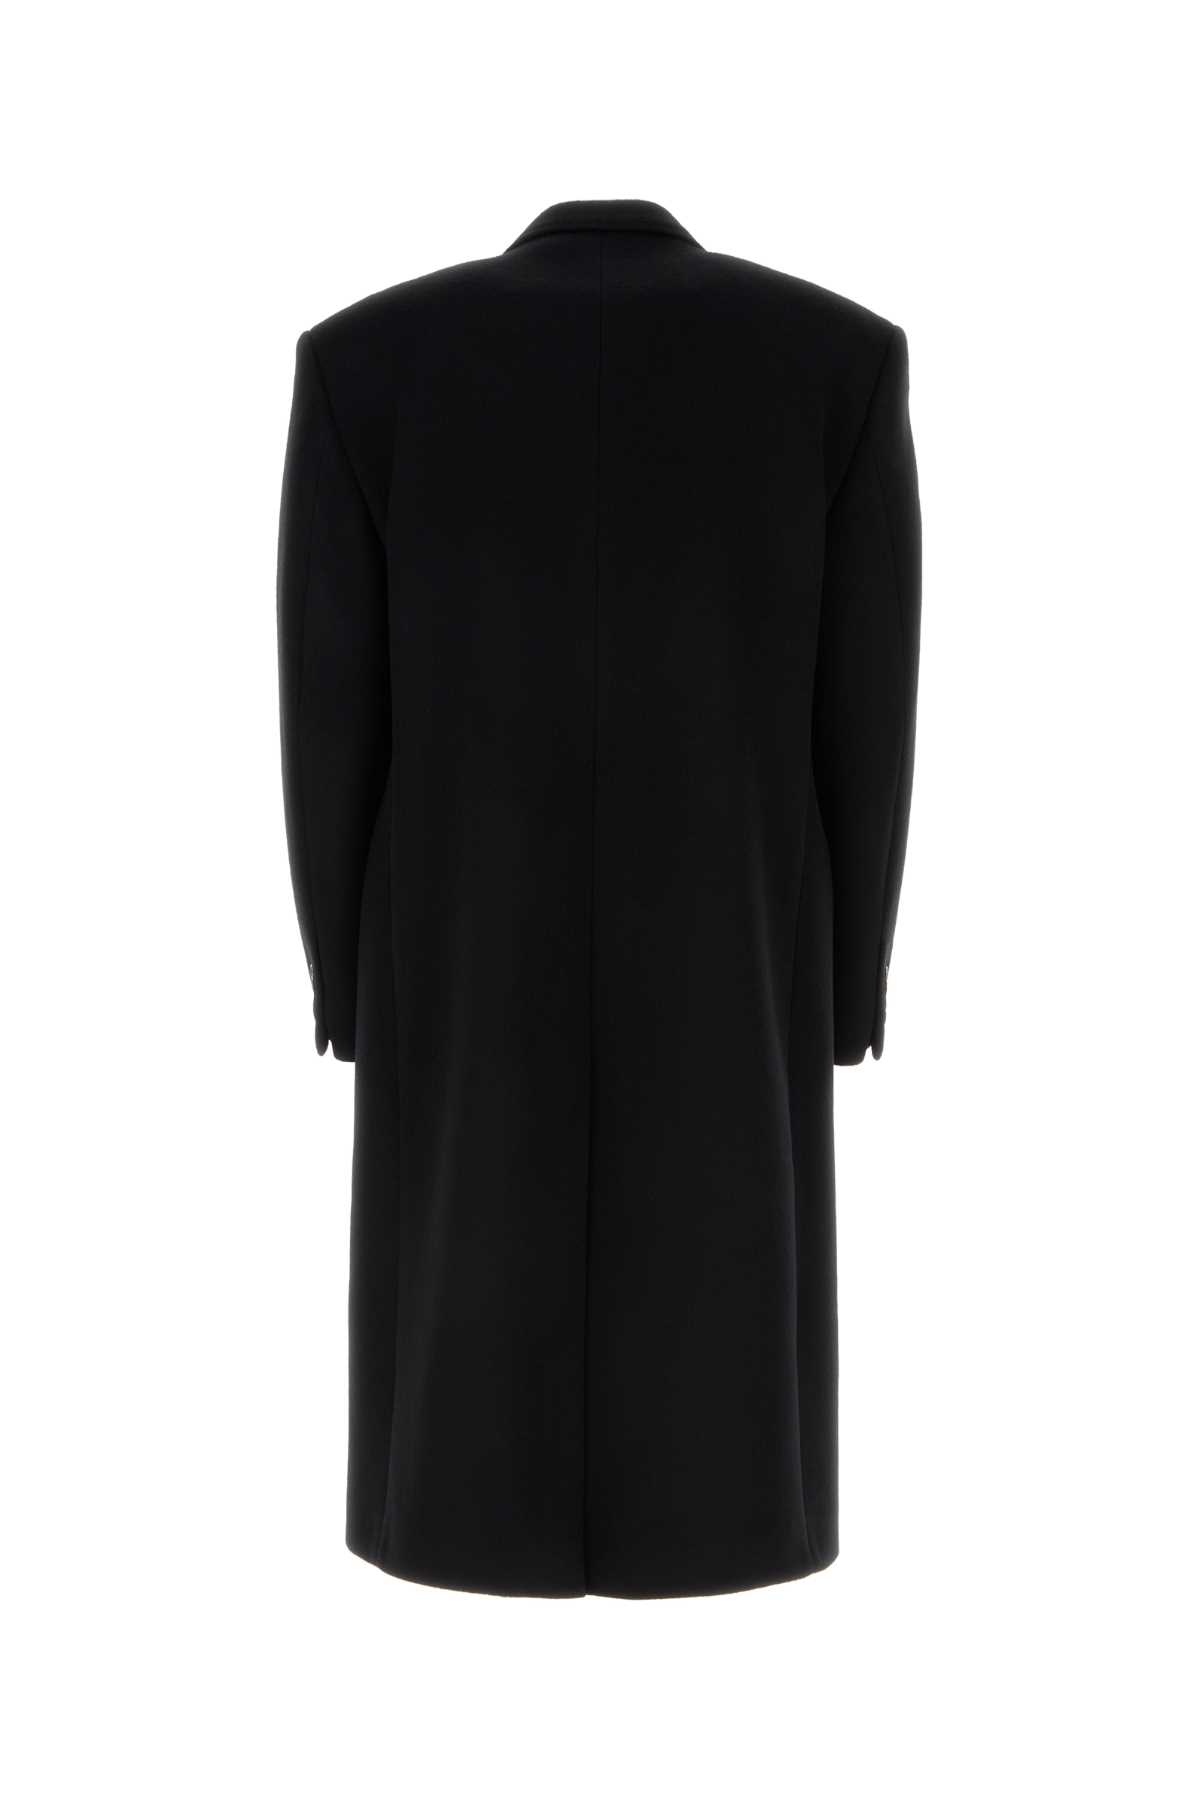 Balenciaga Black Wool Oversize Coat